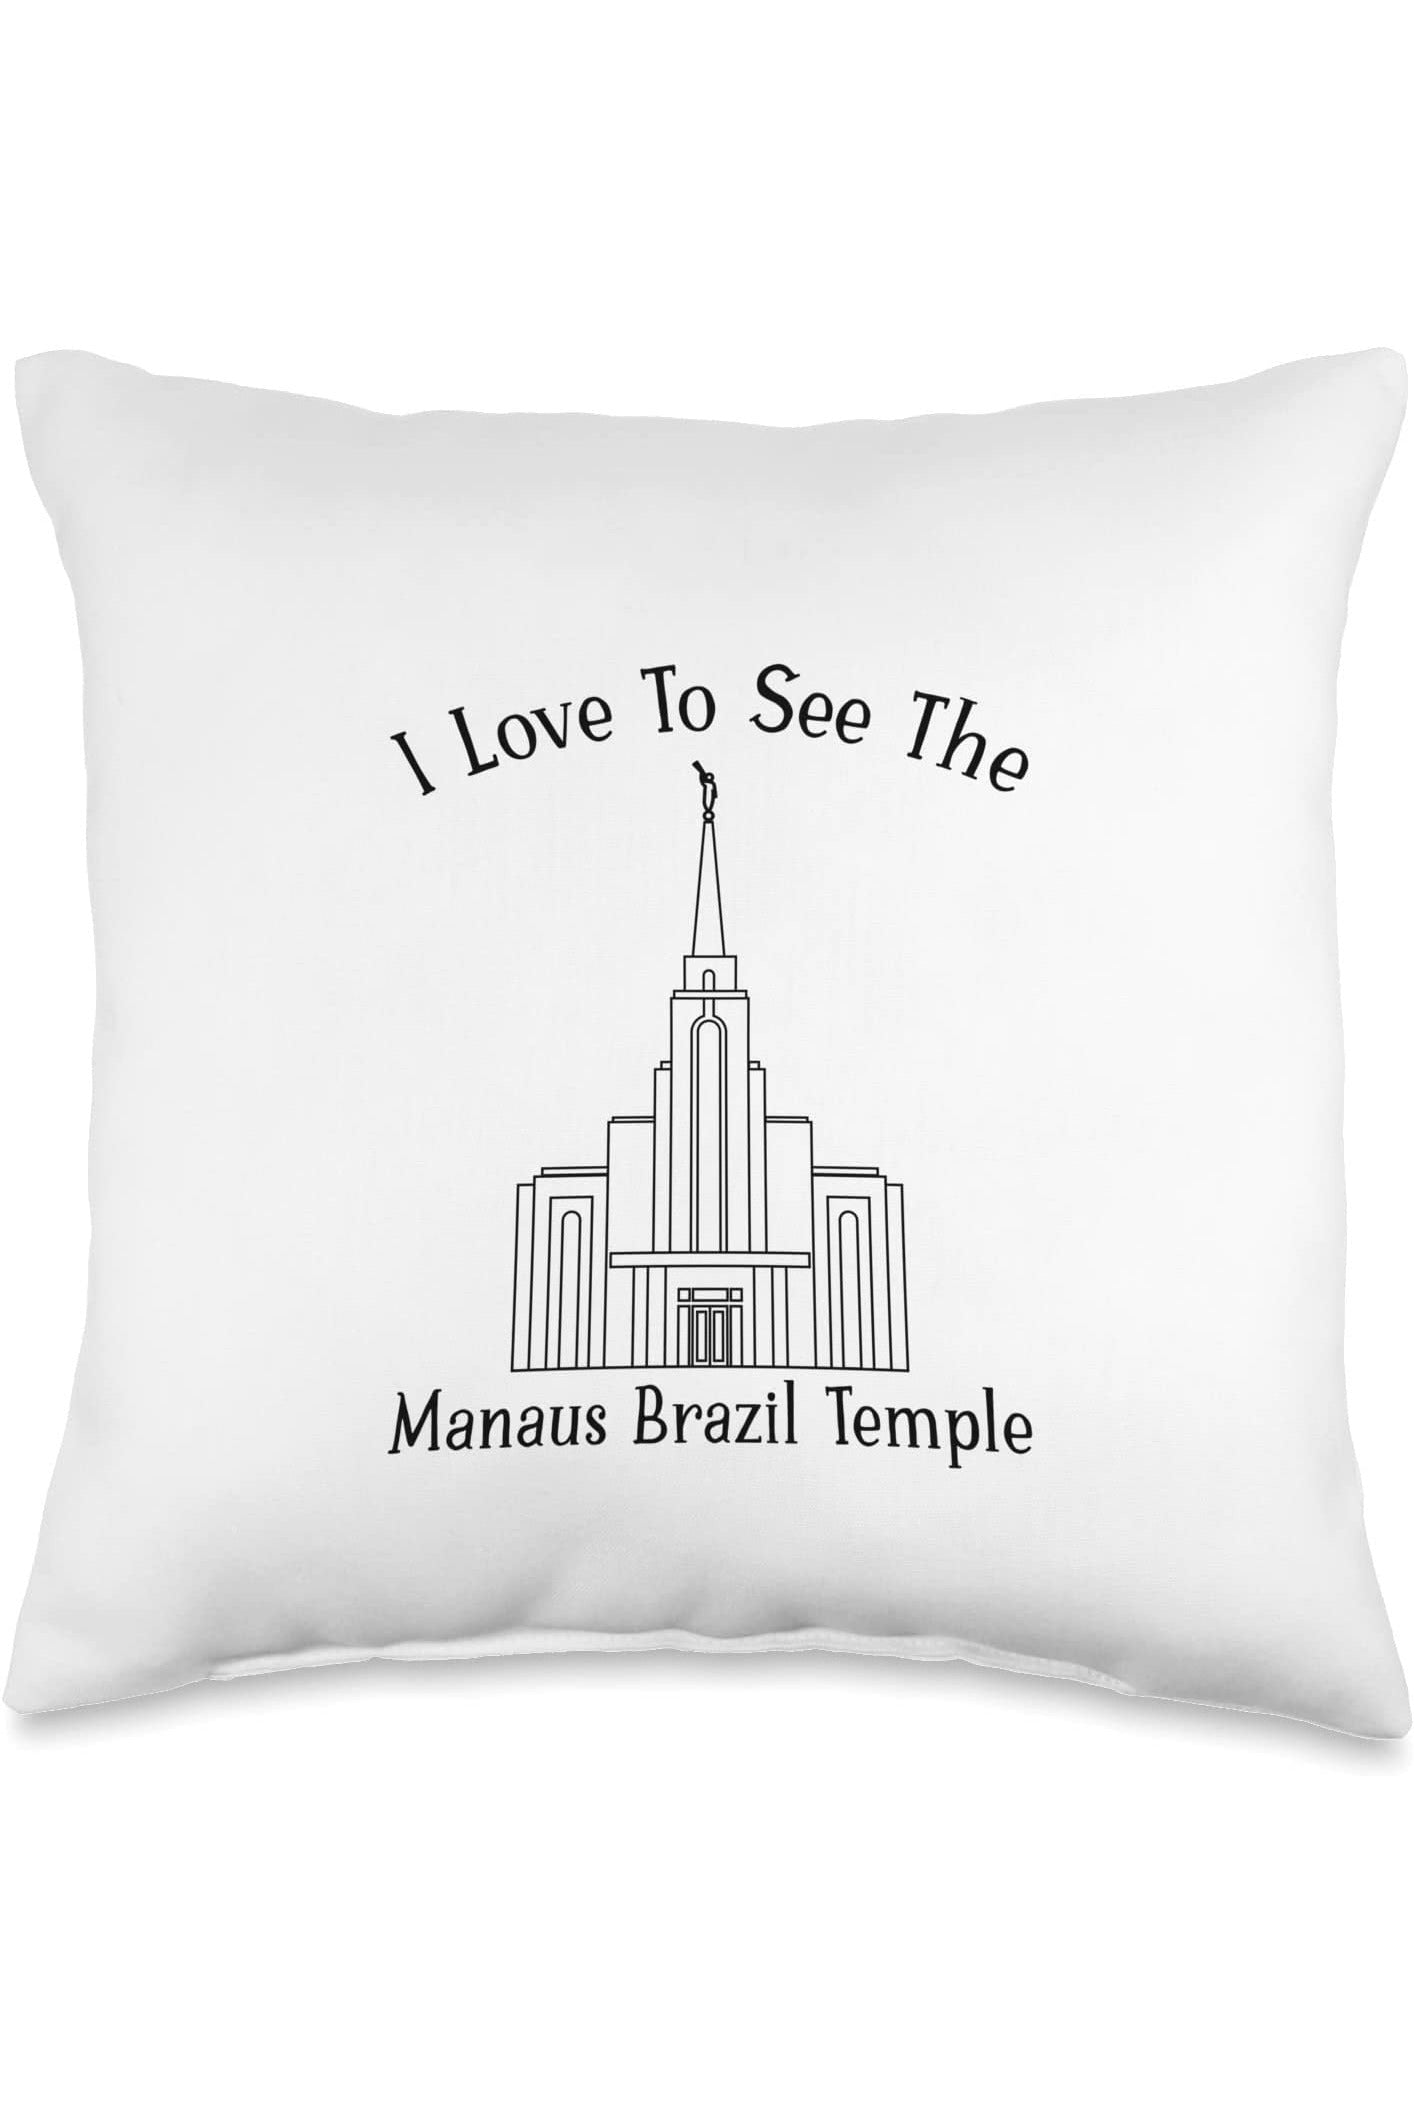 Manaus Brazil Temple Throw Pillows - Happy Style (English) US